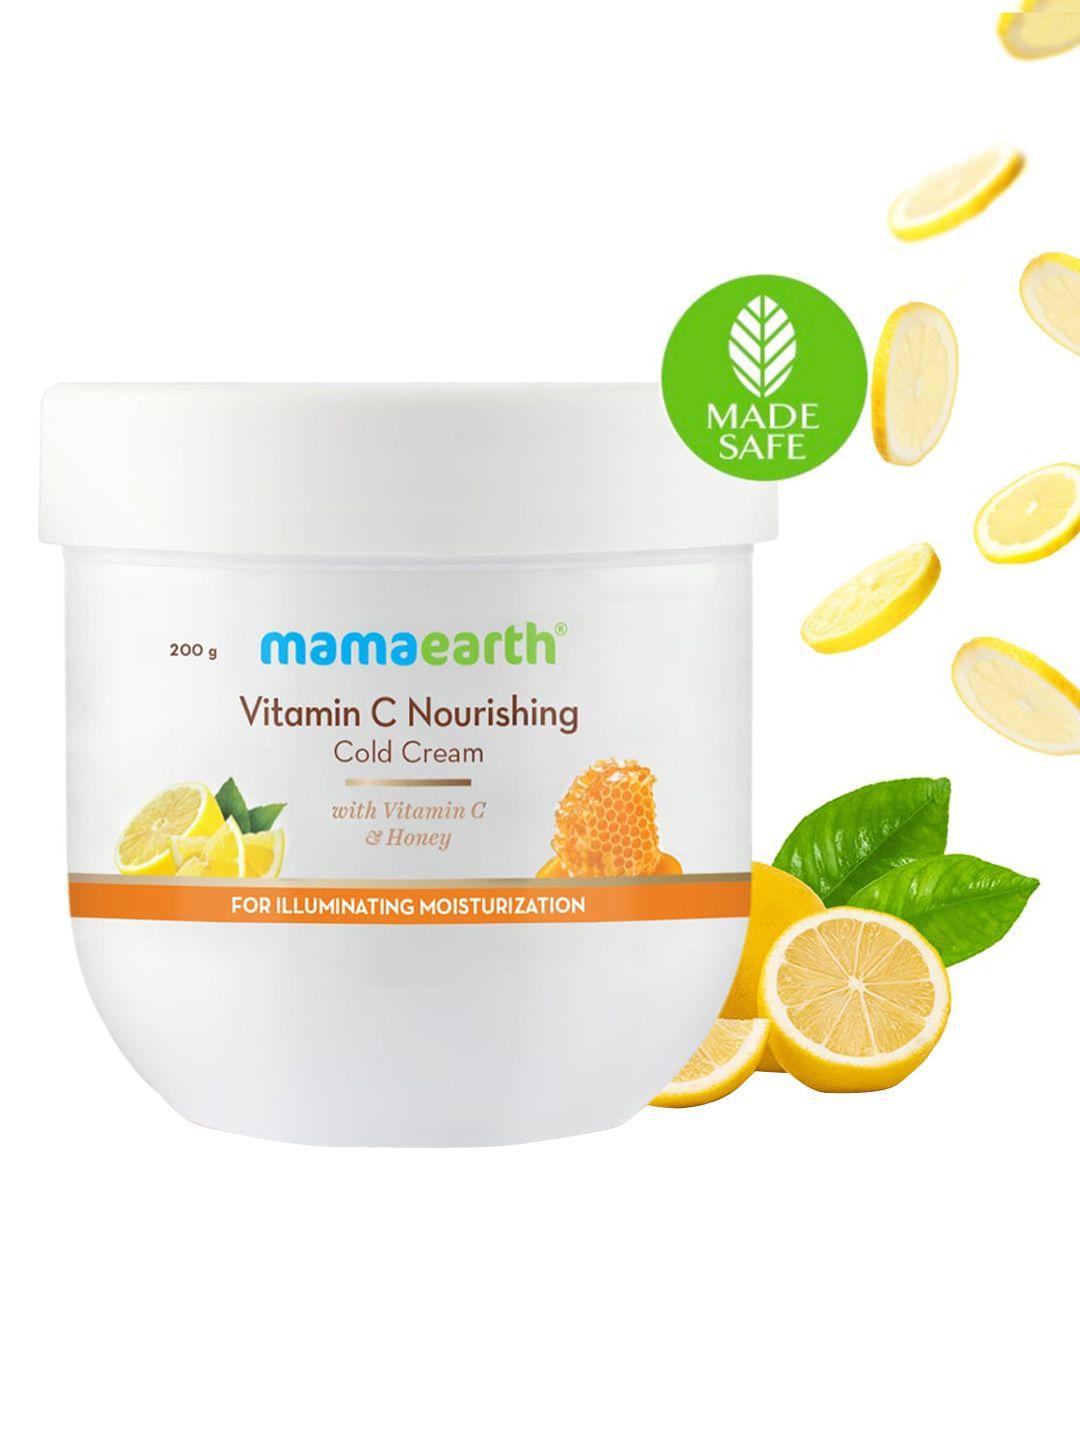 mamaearth vitamin c nourishing cold cream for face & body with vitamin c & honey - 200g